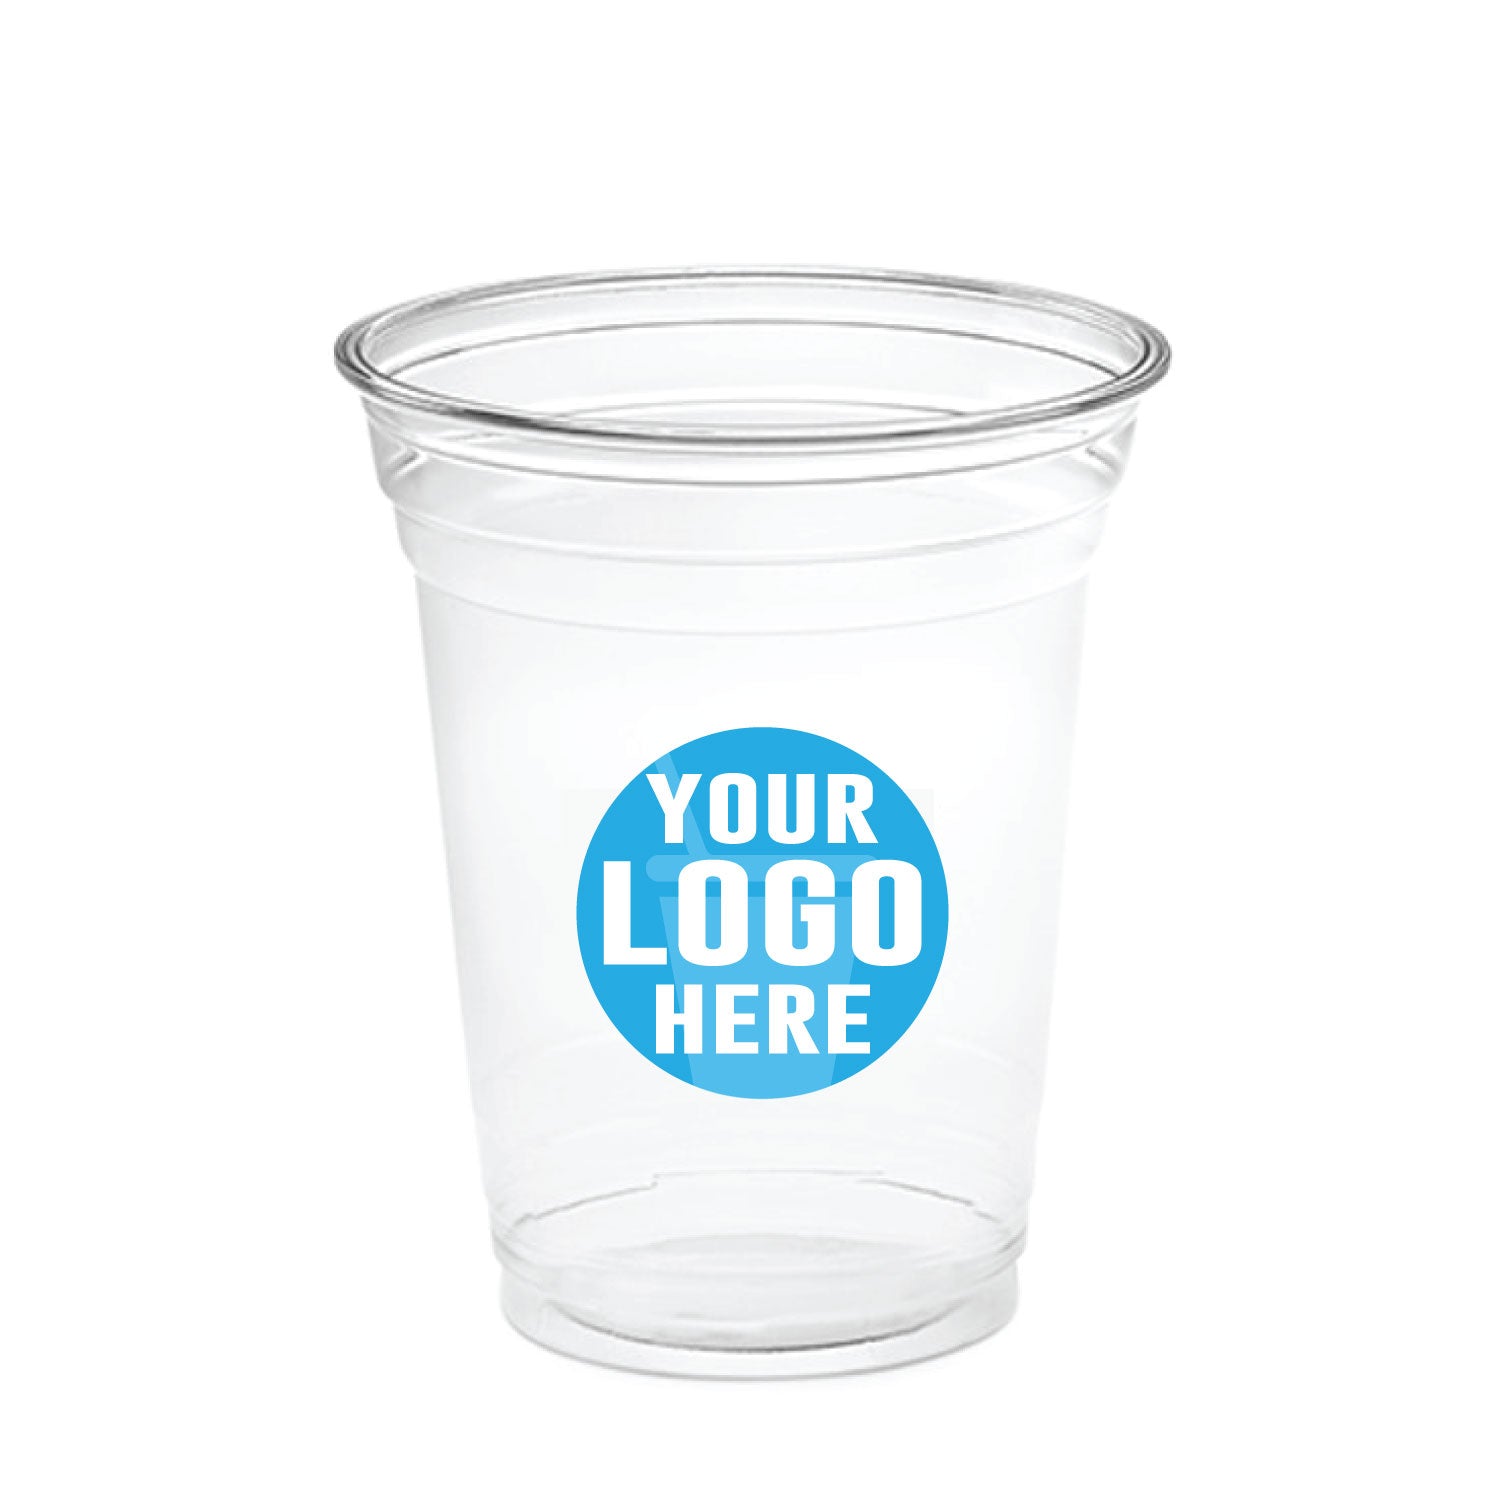 Premium Vector  Plastic transparent cups for smoothie with